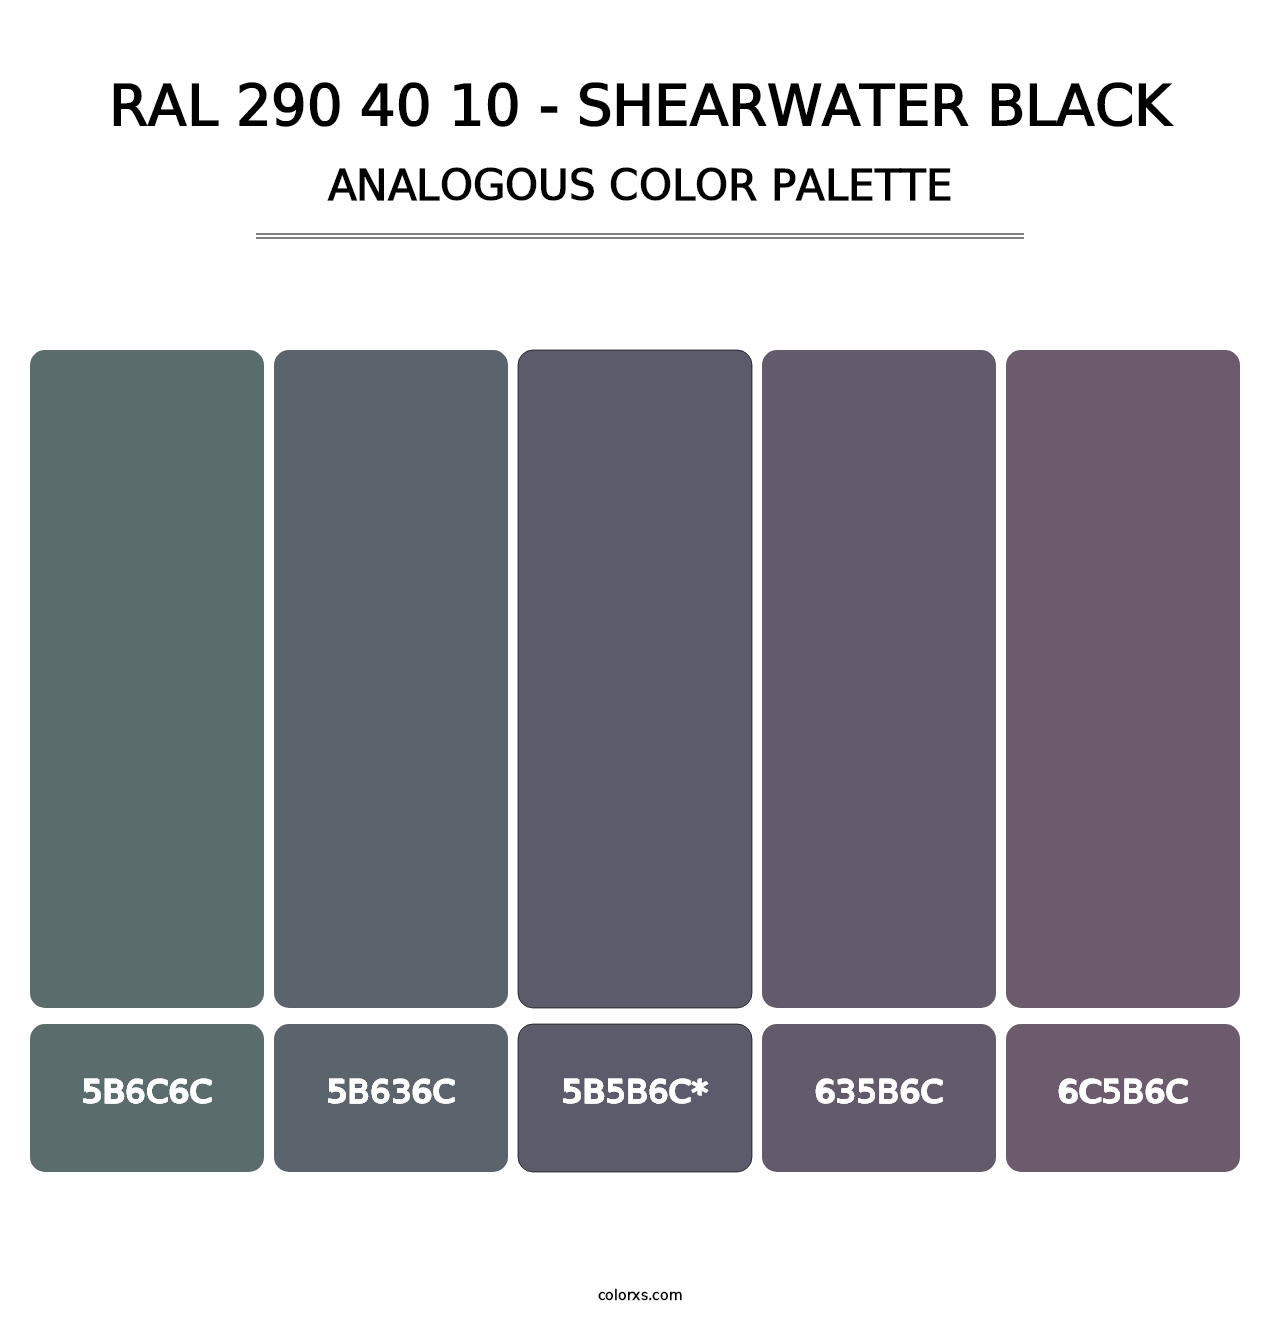 RAL 290 40 10 - Shearwater Black - Analogous Color Palette